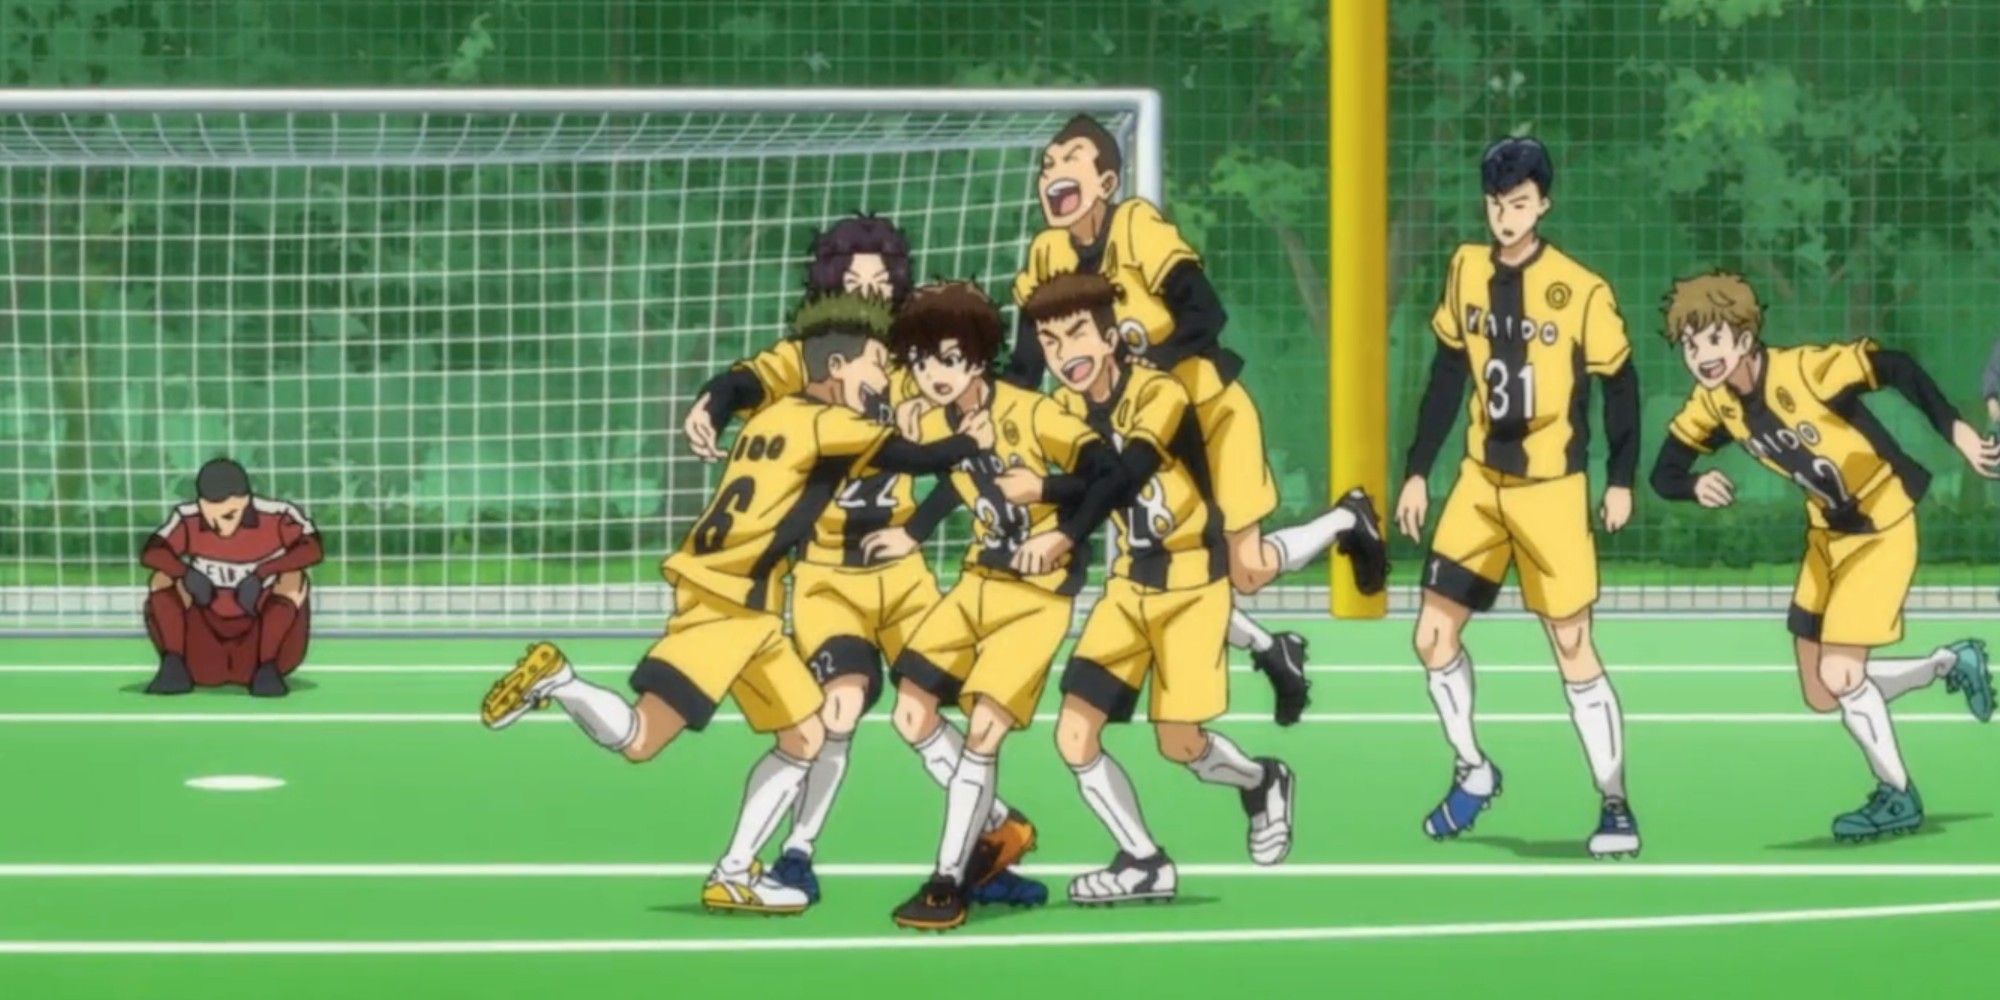 Aoashi Chases High School Soccer Dreams in First PV - Crunchyroll News